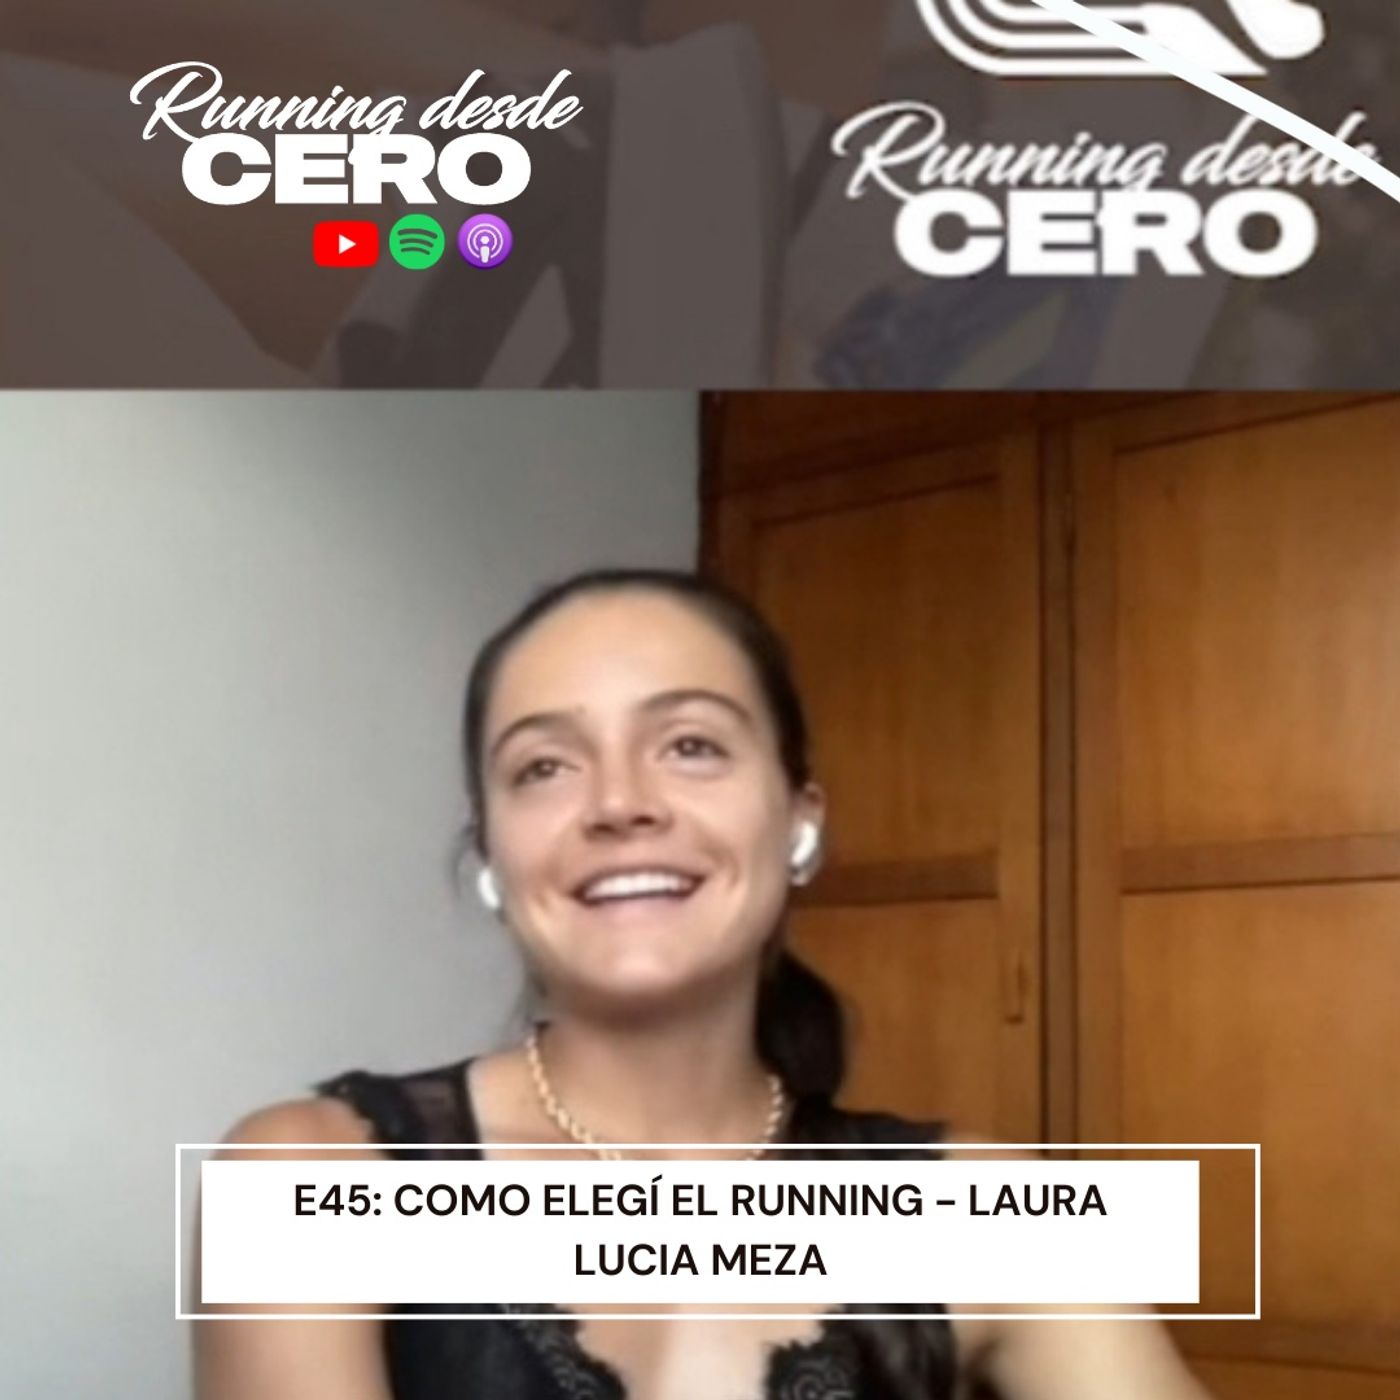 E45: Cómo elegí el running - Laura Lucia Meza